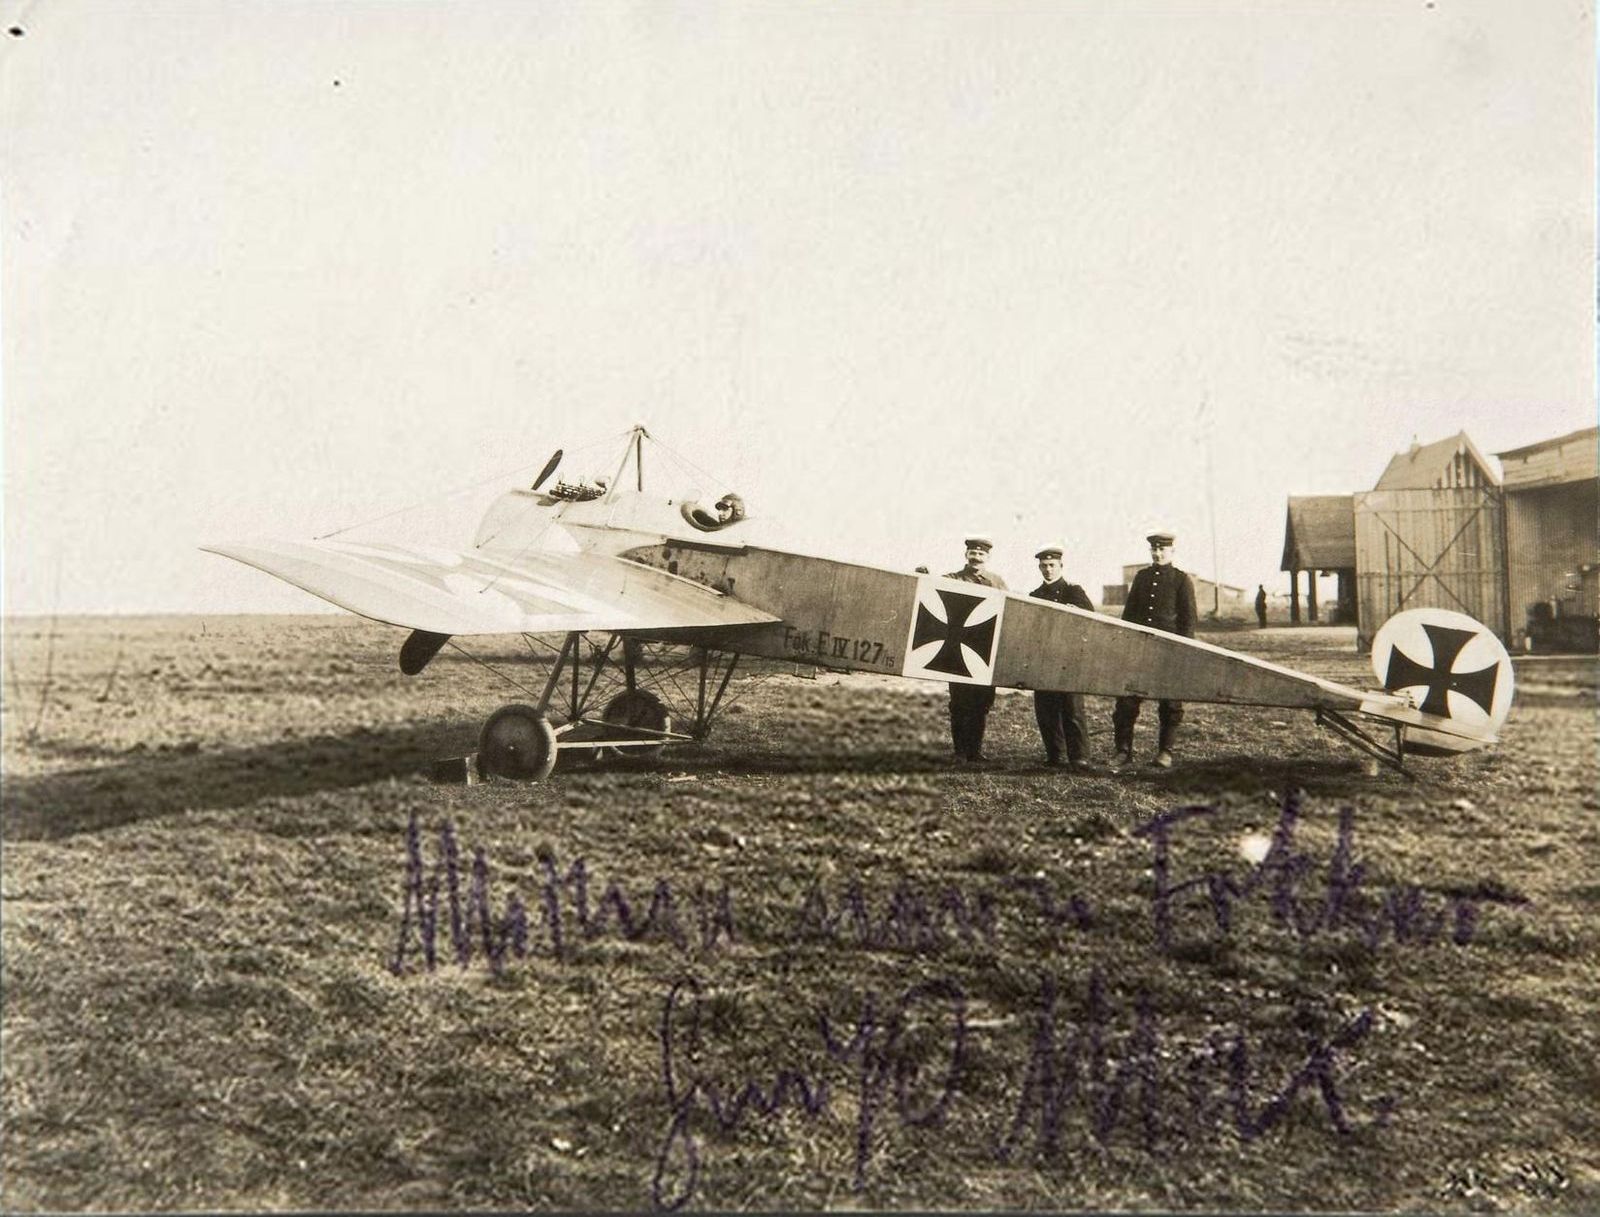 Fokker E.IV no. 127/15